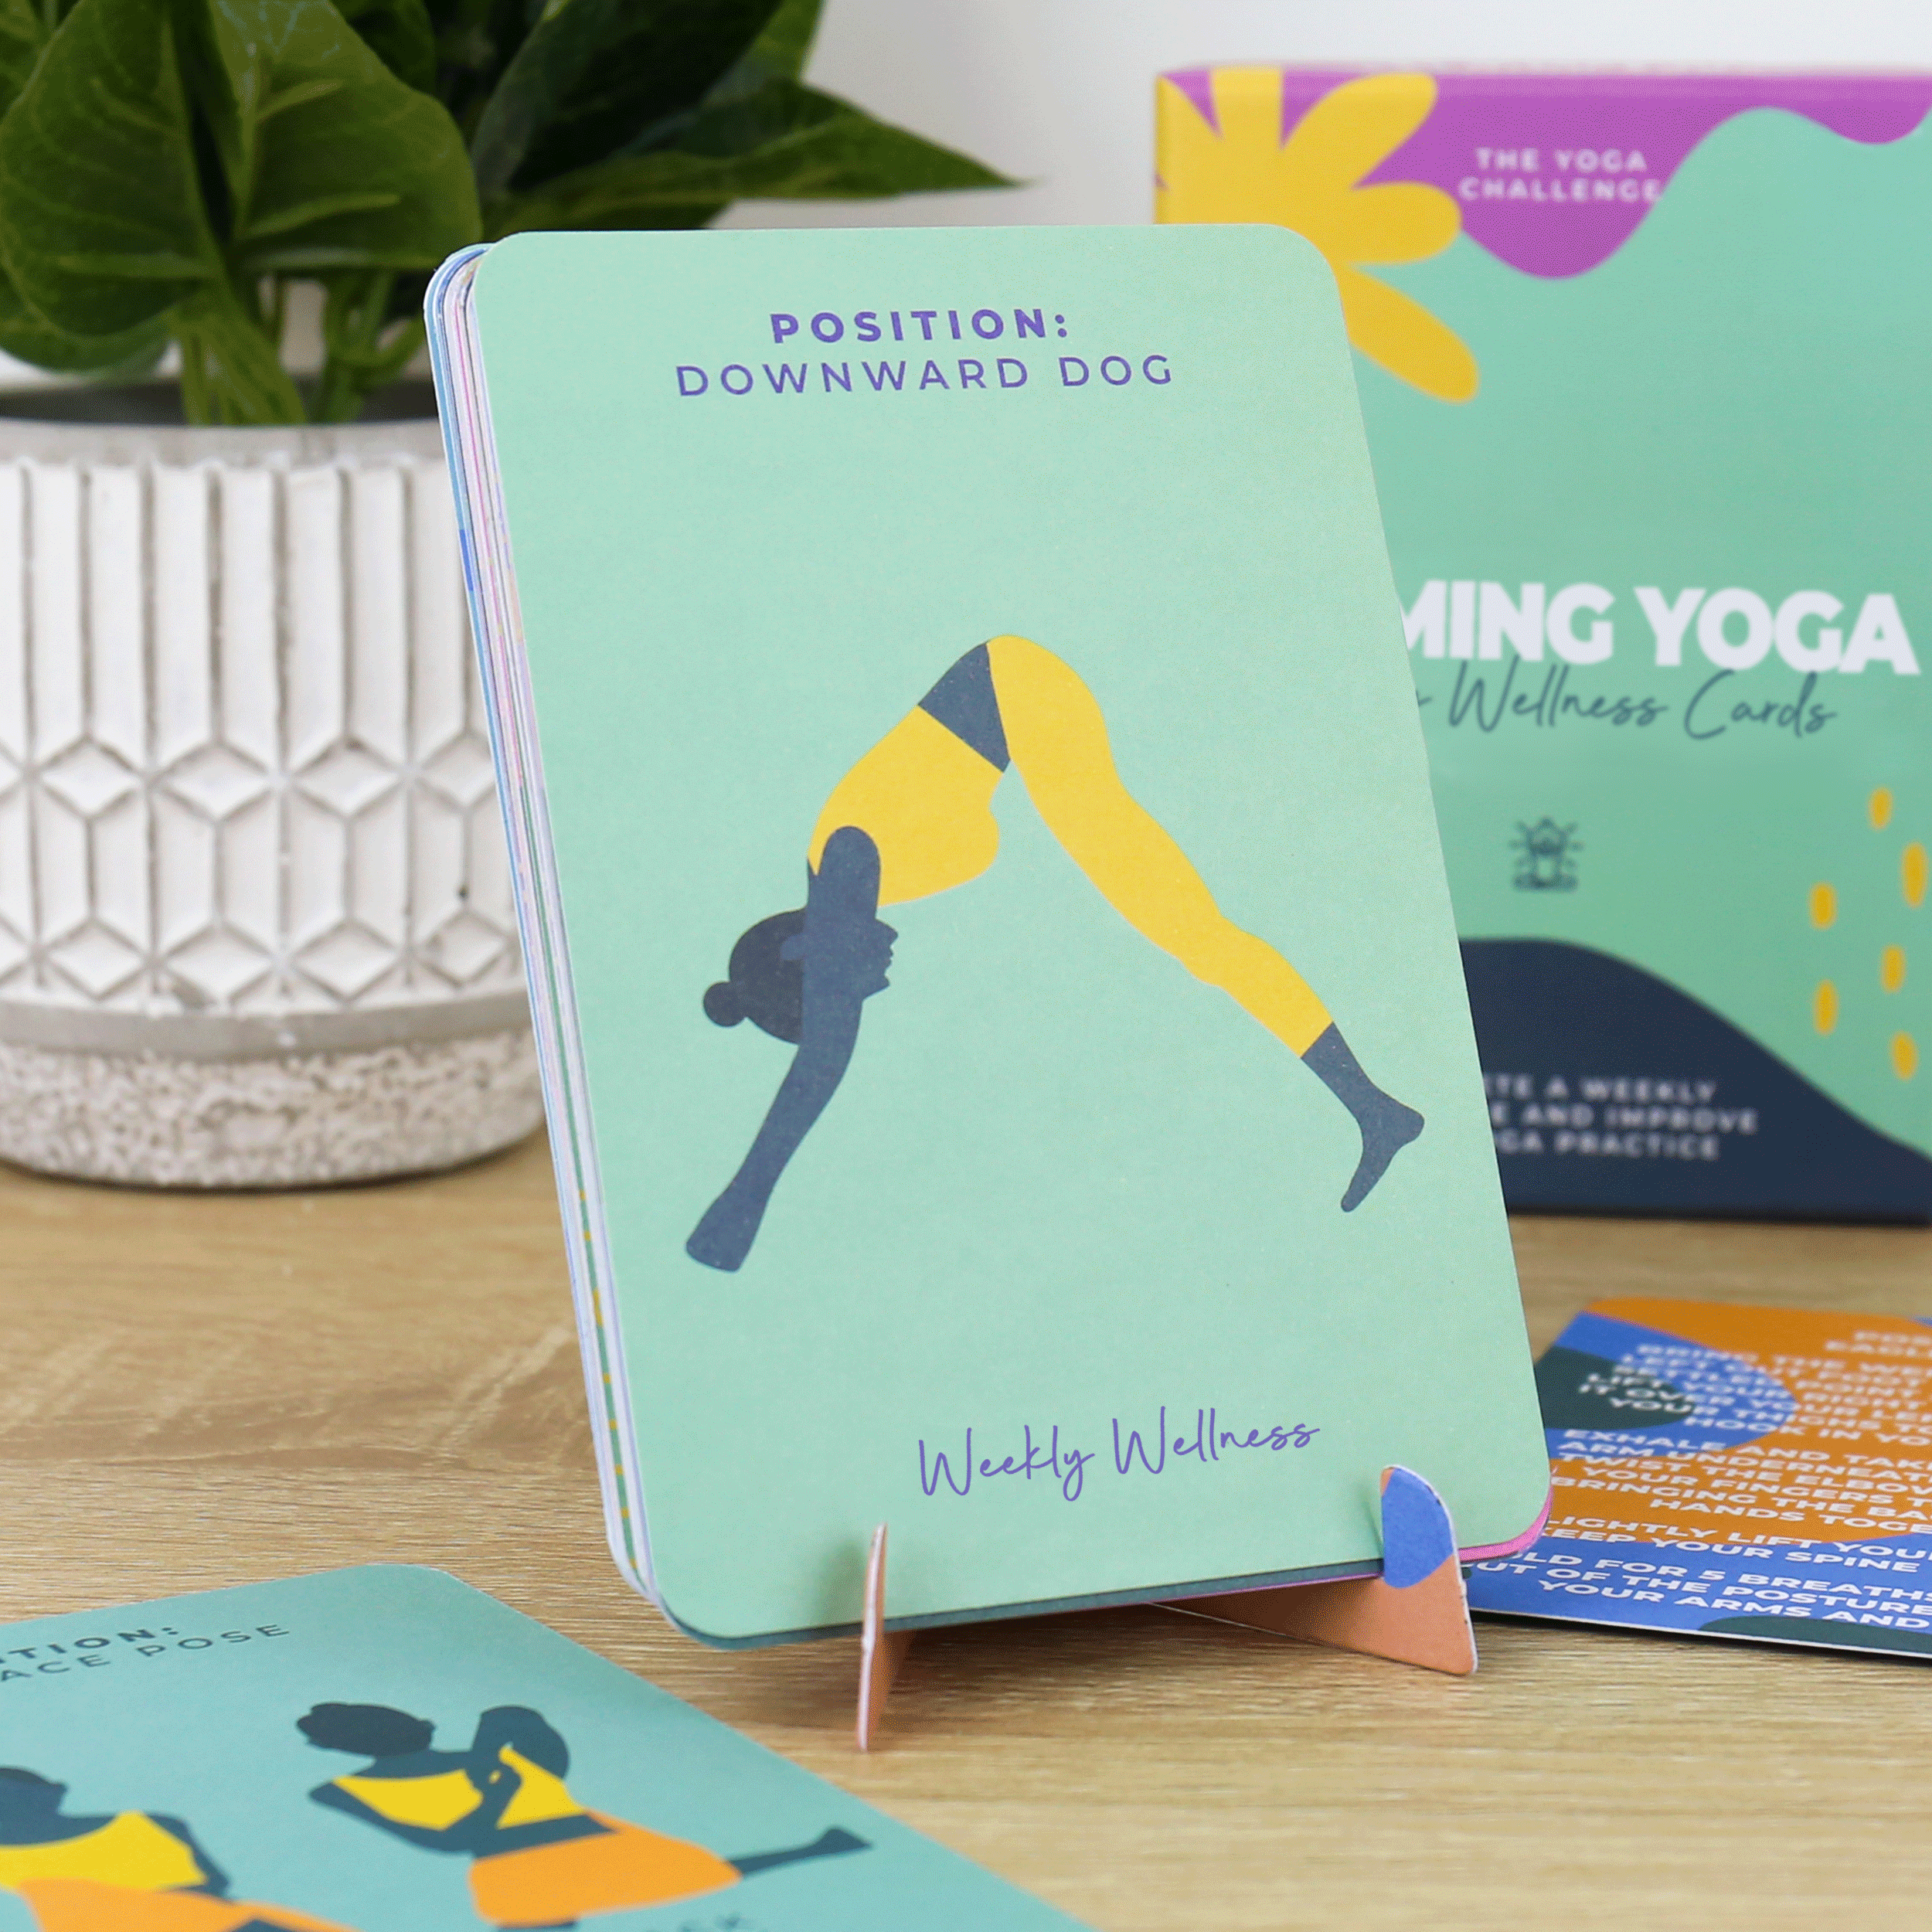 Weekly Wellness Cards - Yoga